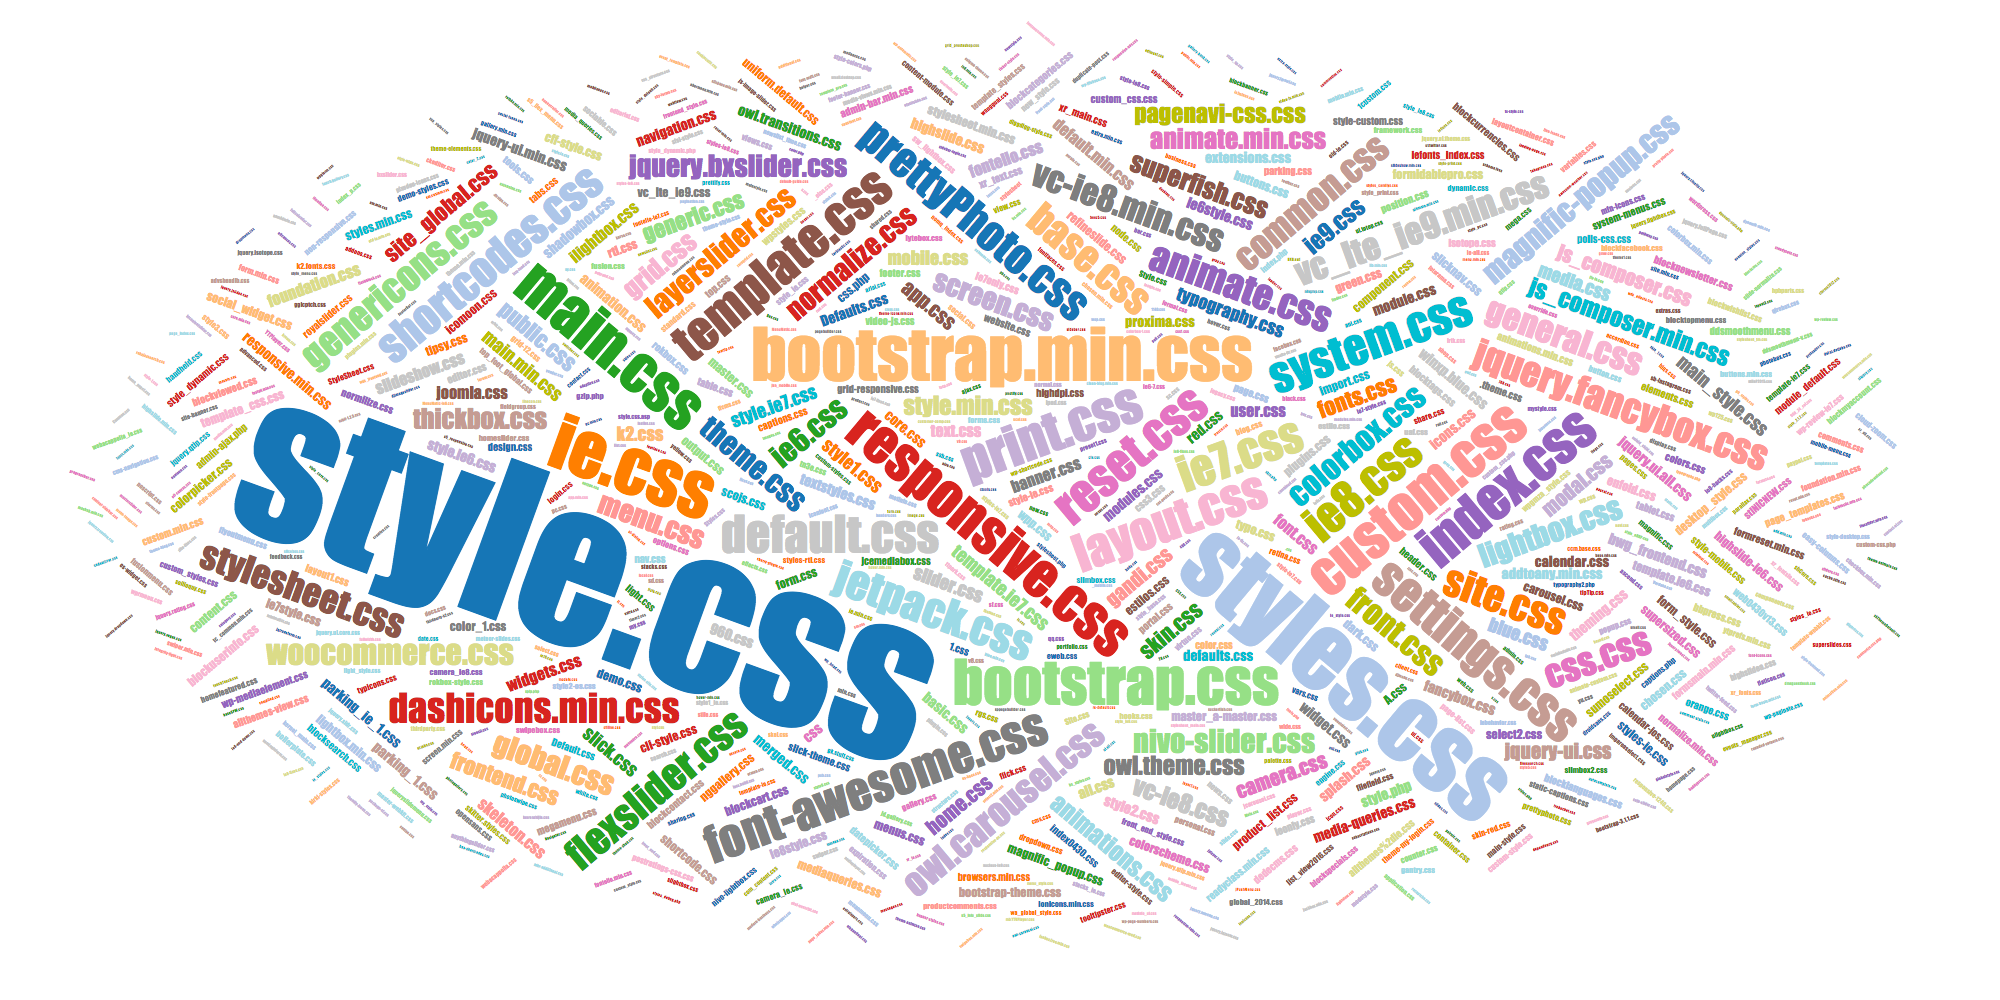 Popular names of CSS files common.css, custom.css, etc.